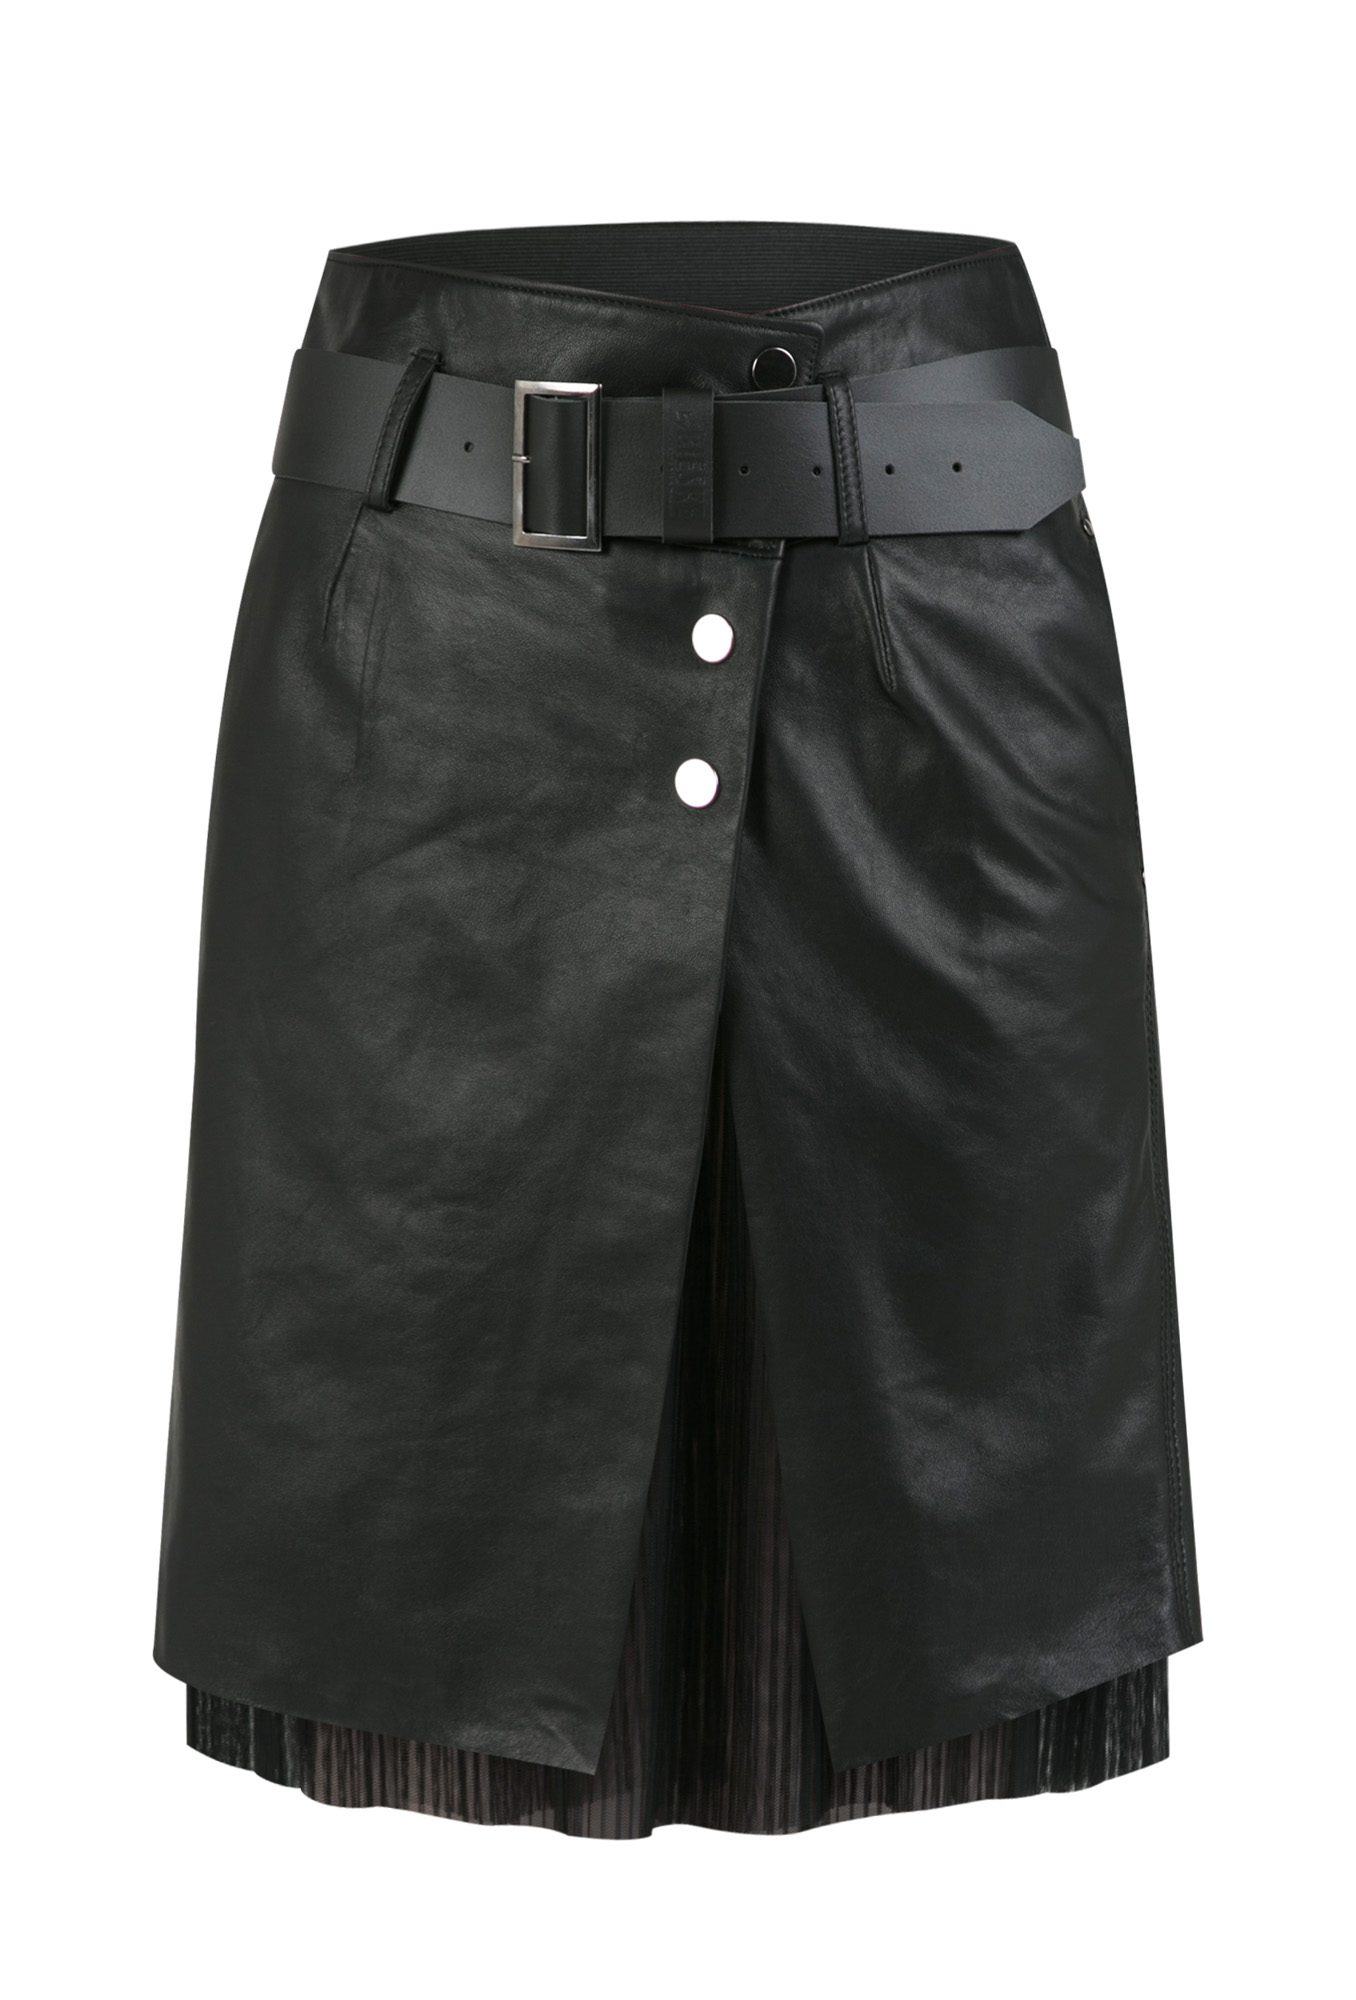 leather skirt, leather skirt with leather strap, black leather skirt, black natural leather skirt with petticoat, Italian leather skirt, natural leather skirt, black leather skirt, leather skirts with belt